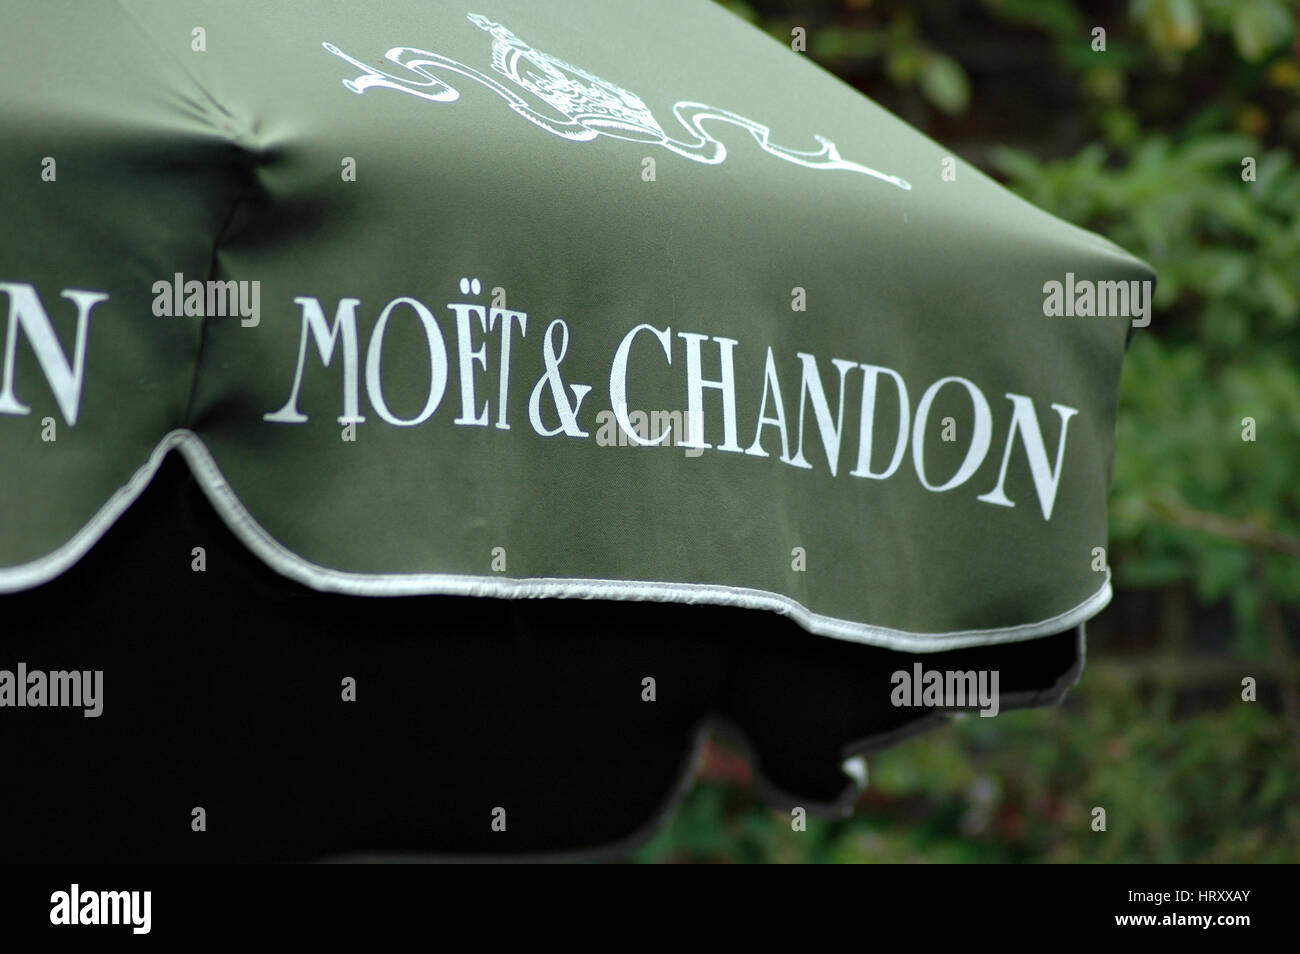 A Moet & Chandon umbrella Stock Photo - Alamy